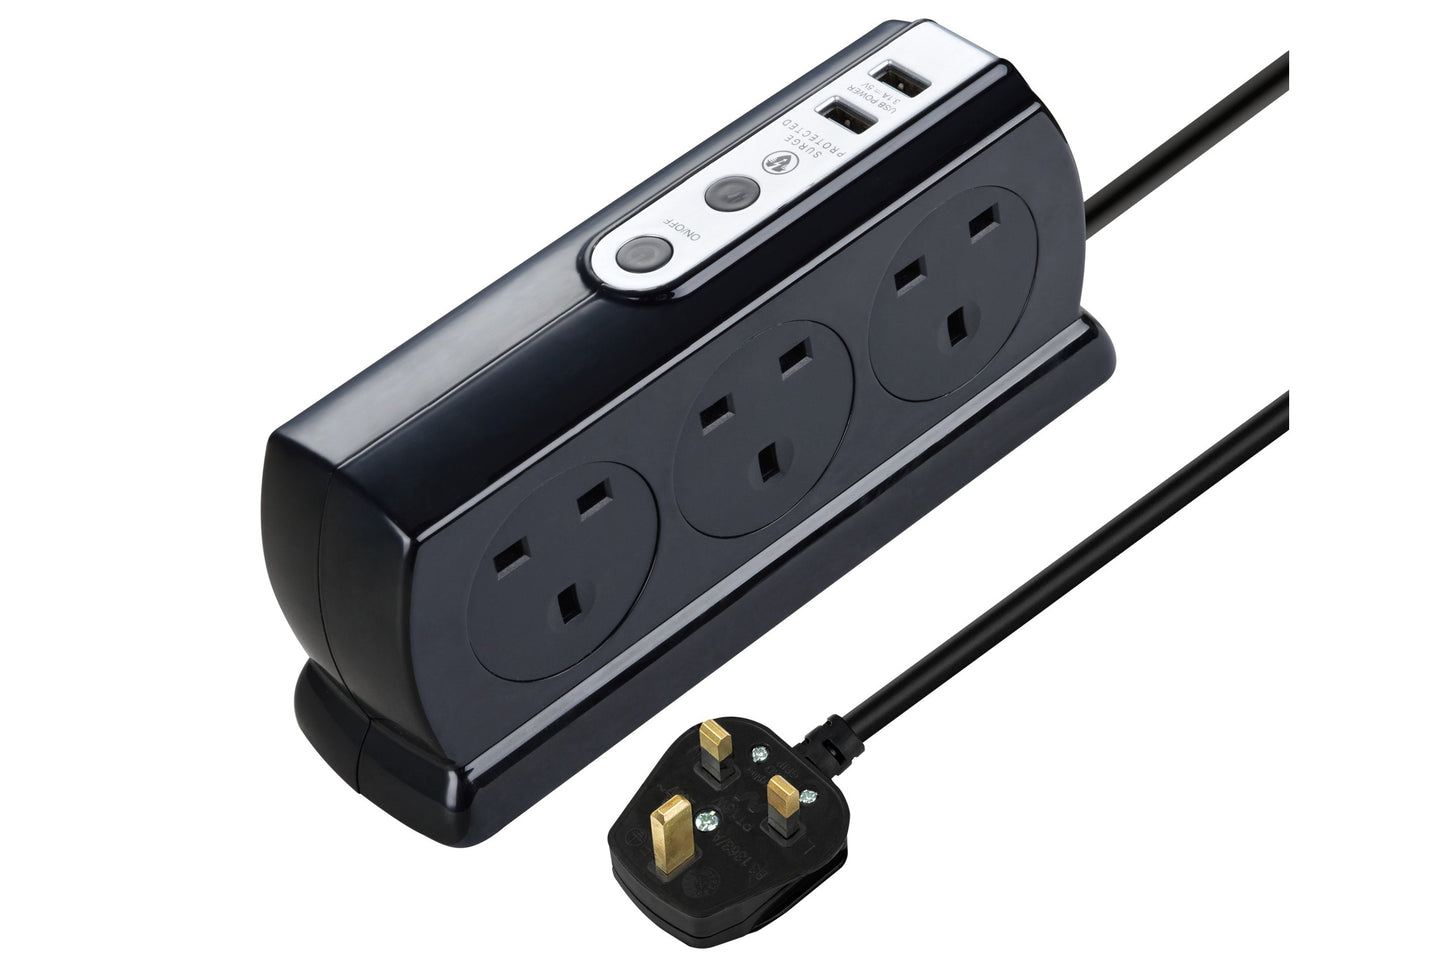 Masterplug 2m 6 Socket 13A plus 2x USB-A Ports Extension Cable Lead - Black - maplin.co.uk